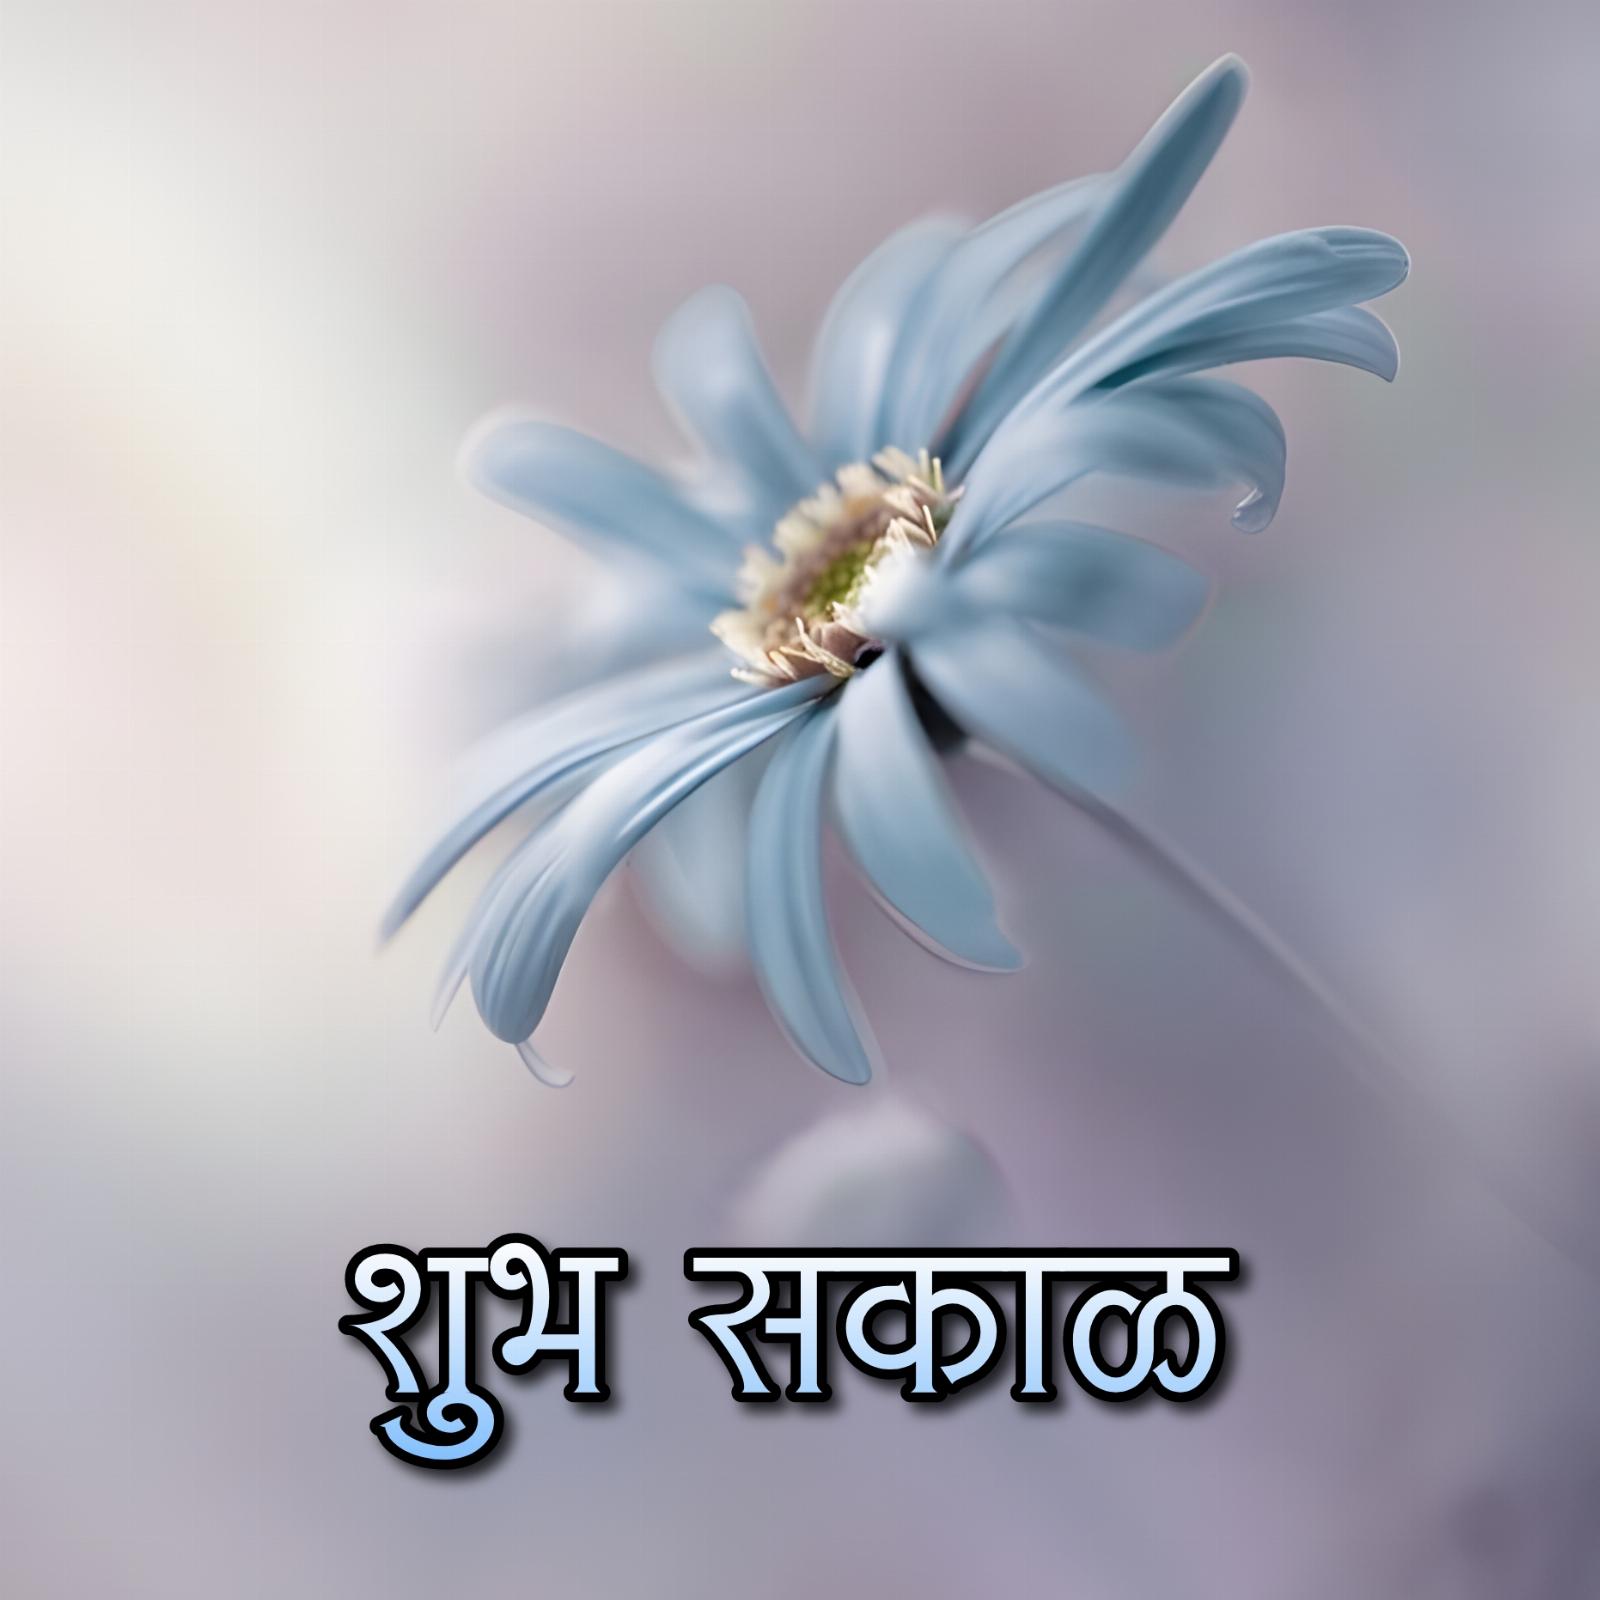 Shubh Sakal Flower Photo